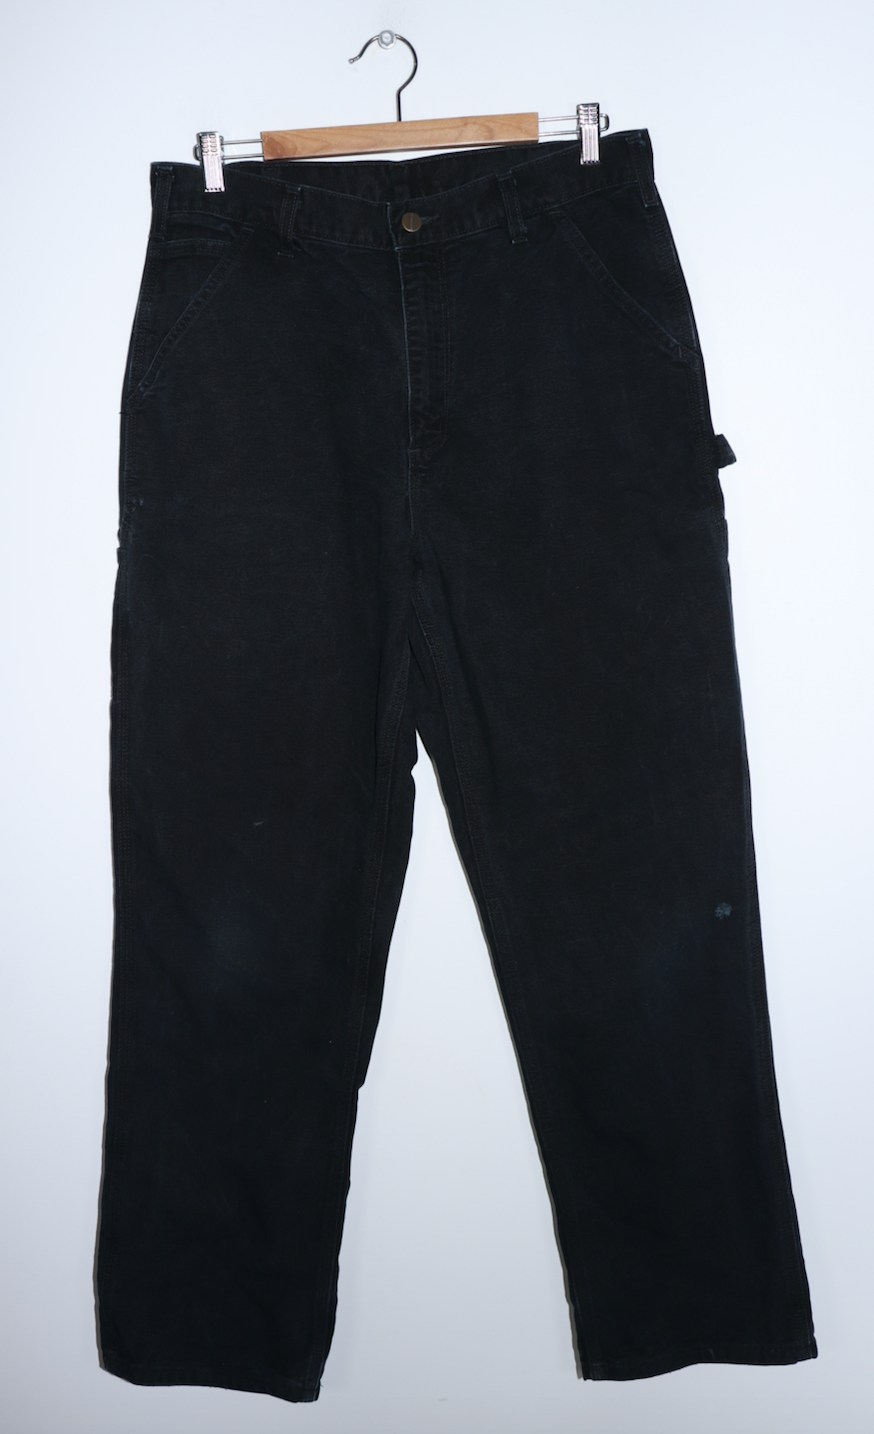 Vintage Carhartt Black Thick Carpenter Pants fits a 32-34